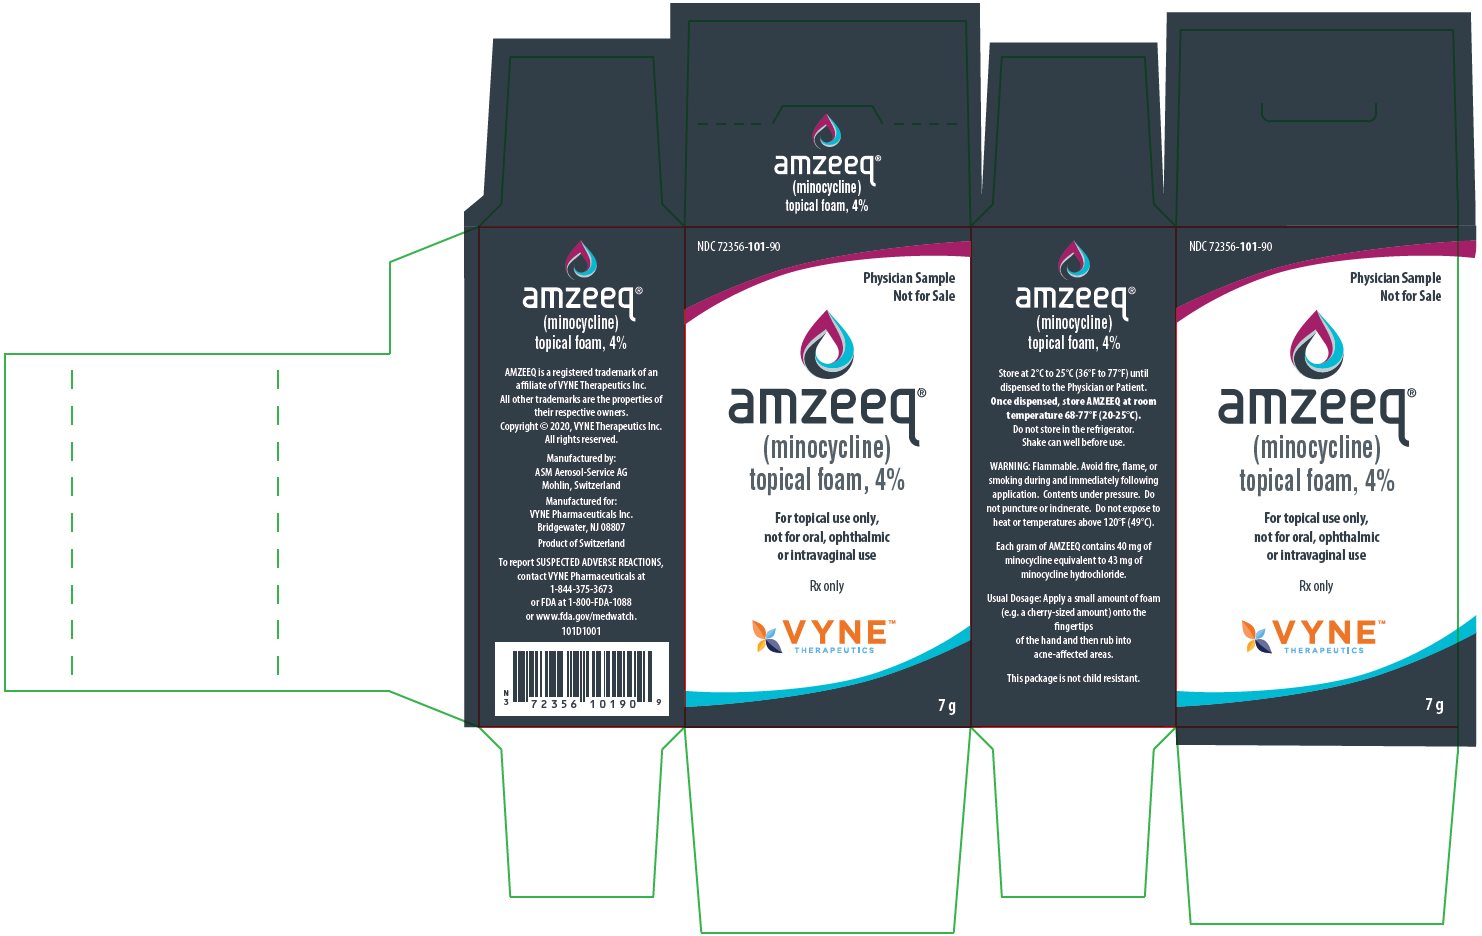 Amzeeq (minocycline) topical foam, 4% physycian sample carton label